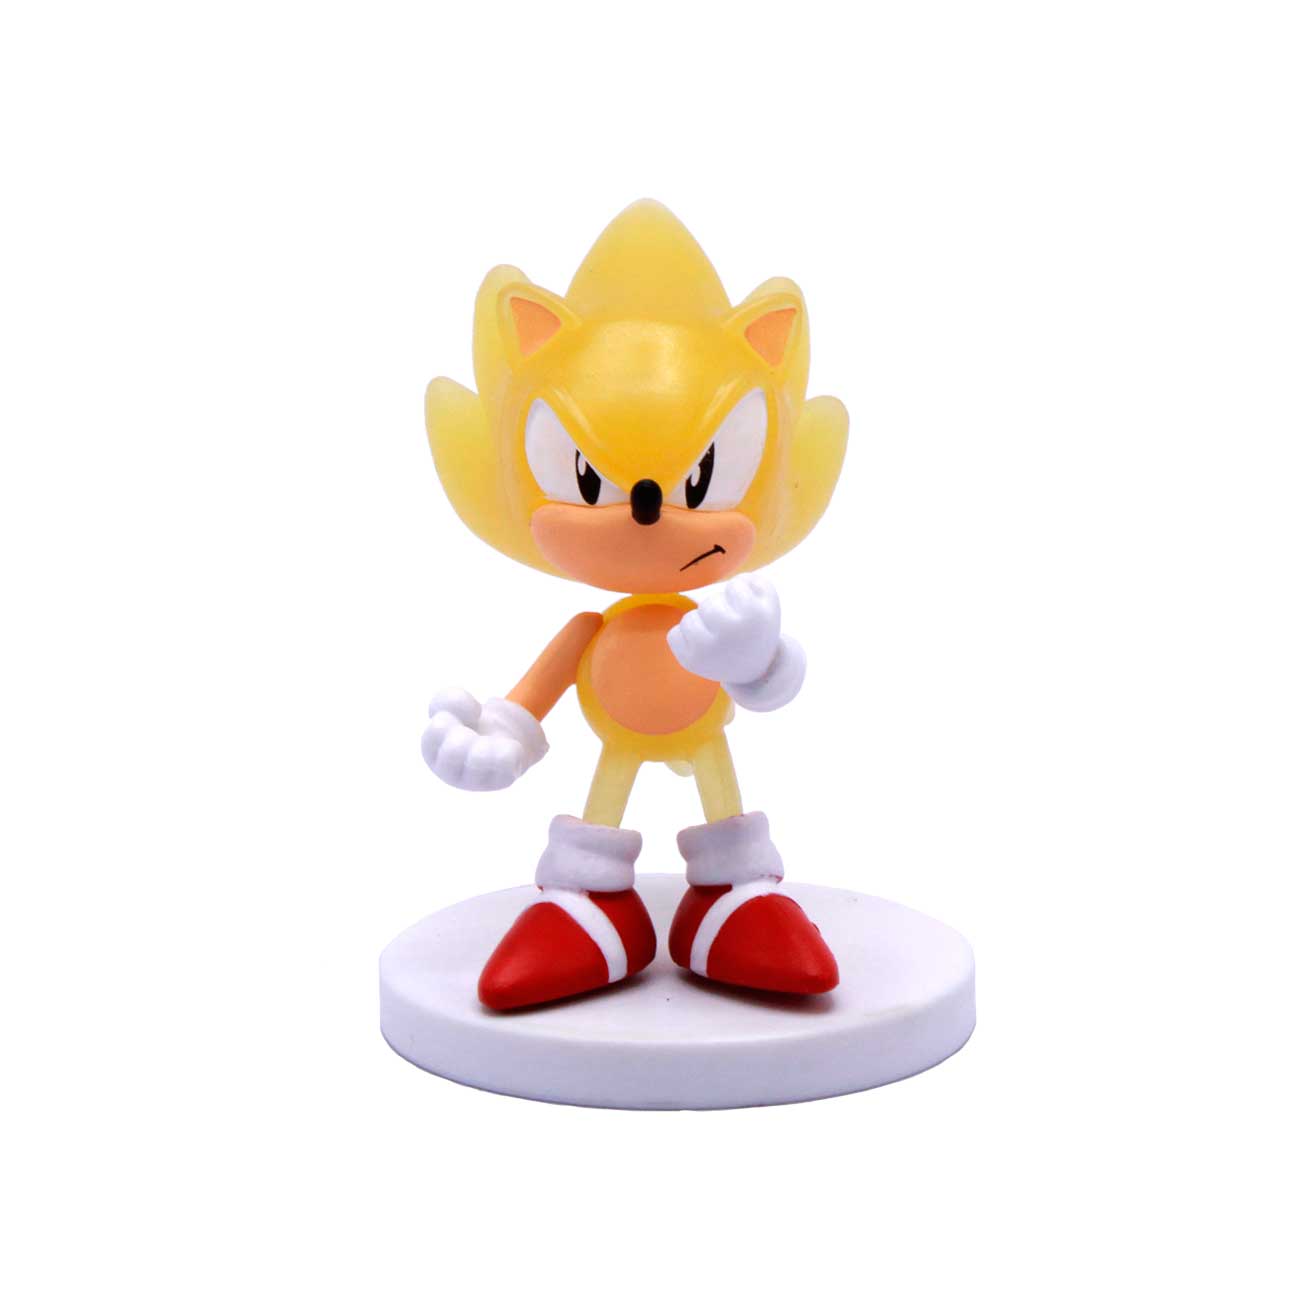 Just Toys LLC Sonic The Hedgehog Mini cifras construibles